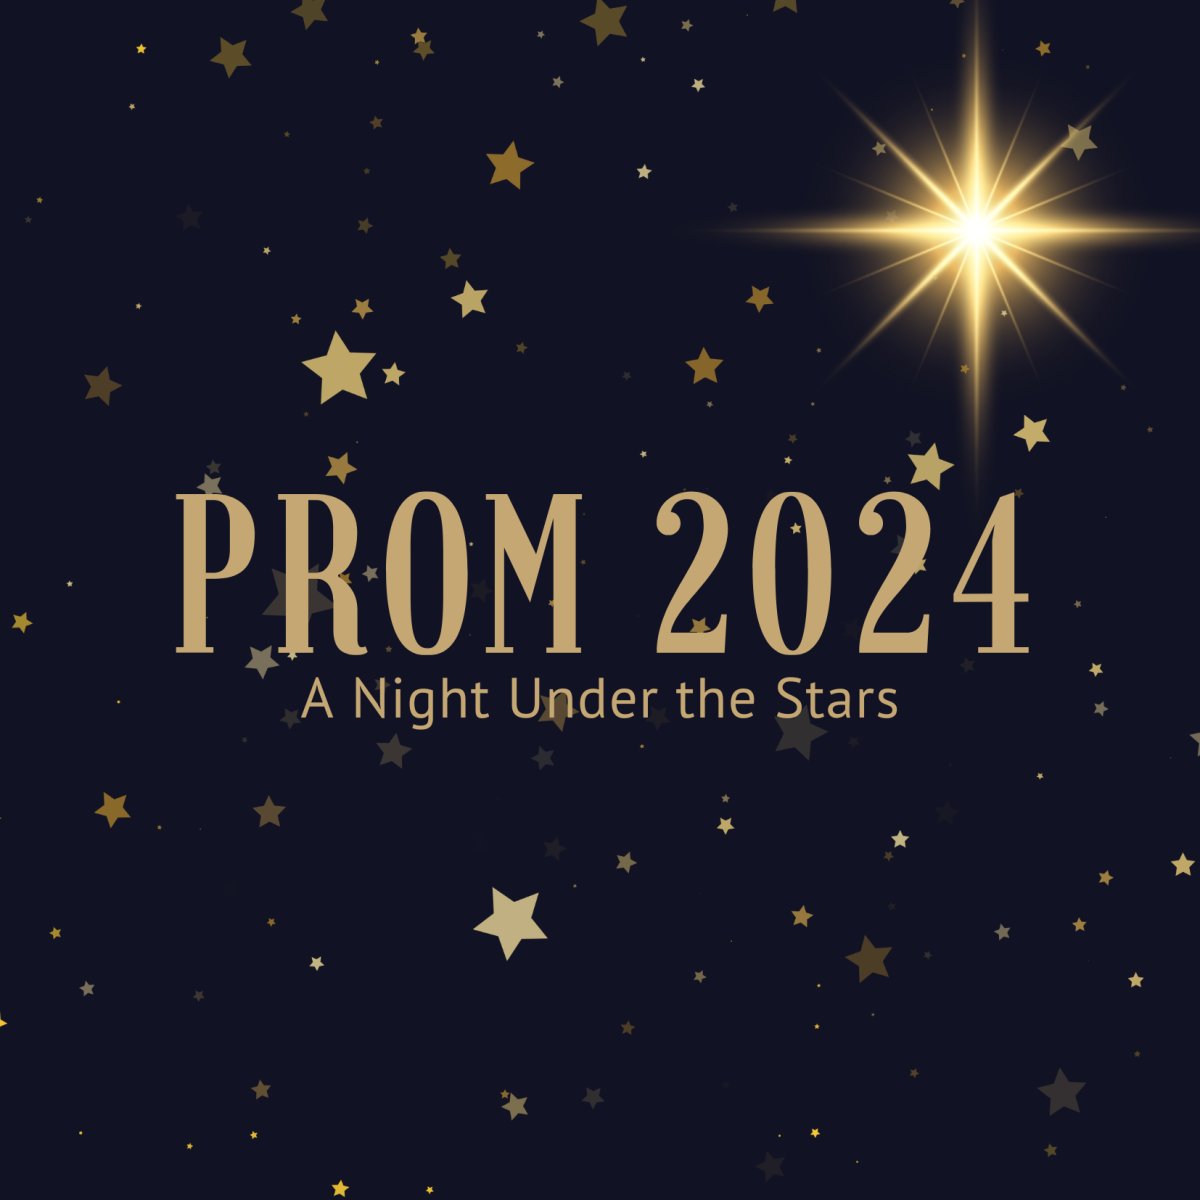 Prom 2024 - A Night Under the Stars